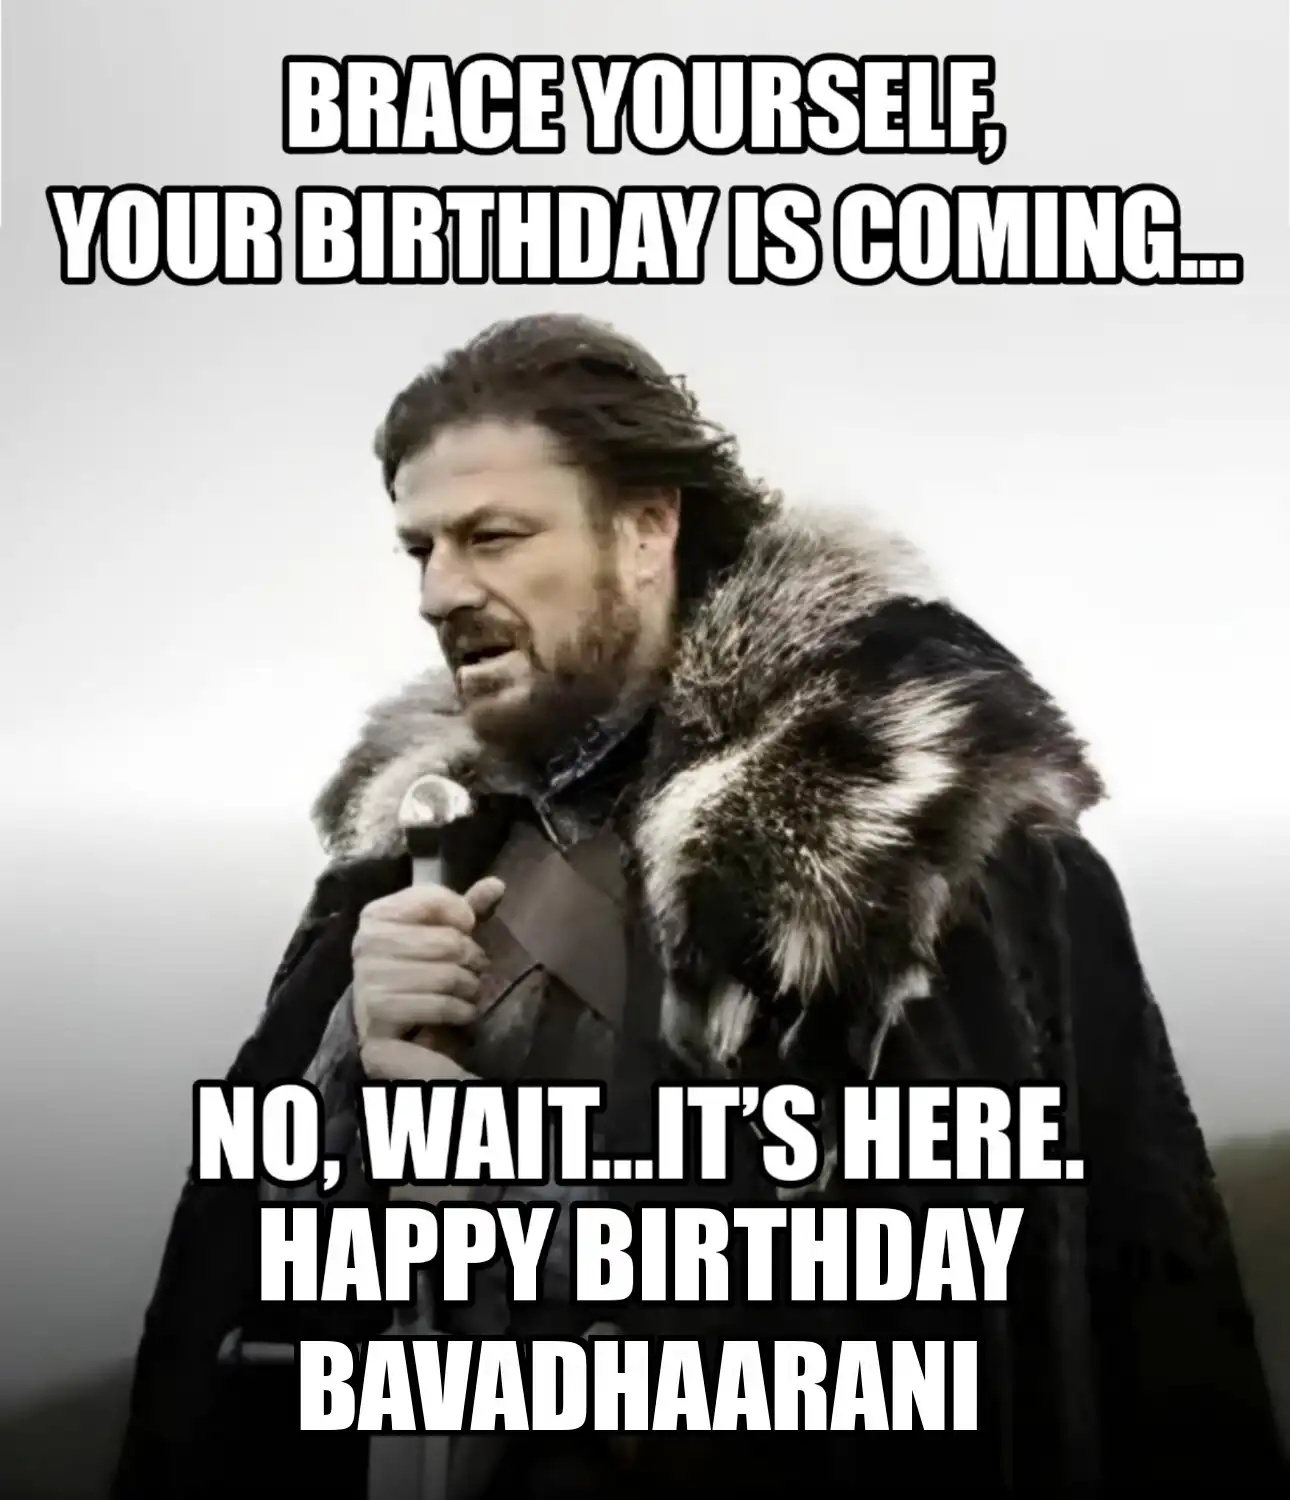 Happy Birthday Bavadhaarani Brace Yourself Your Birthday Is Coming Meme